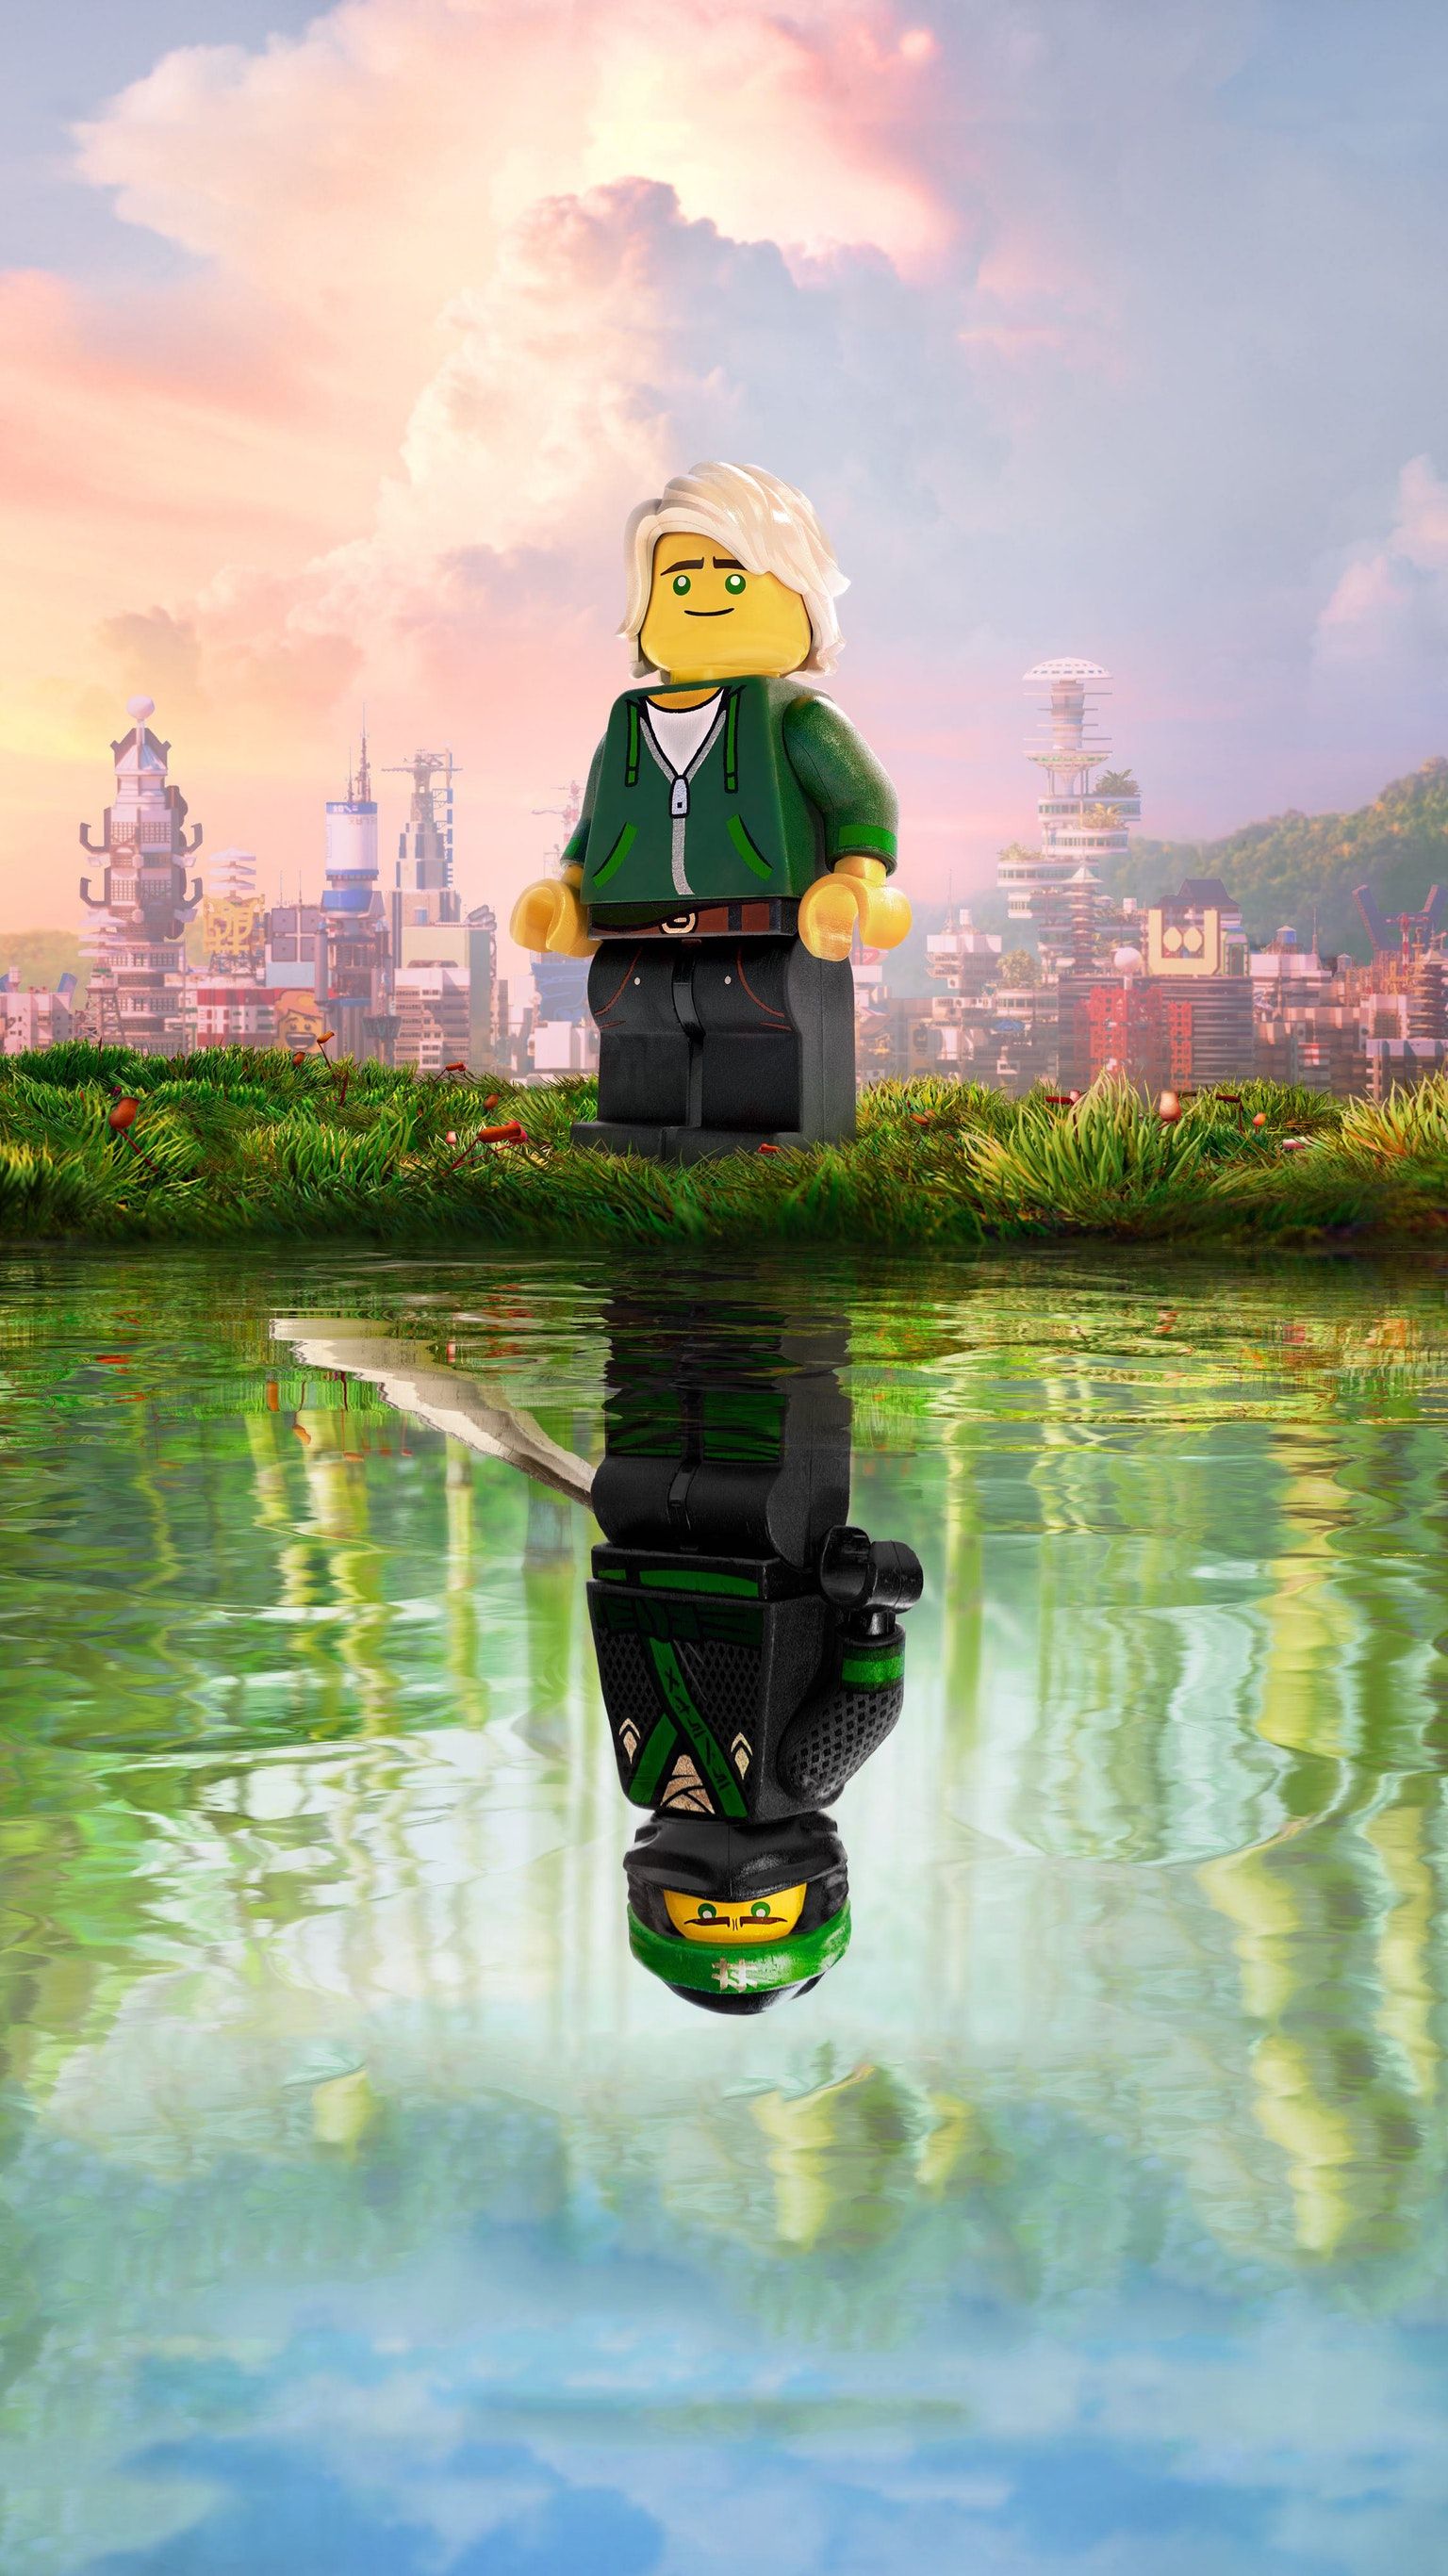 Lego Ninjago Movie Wallpapers